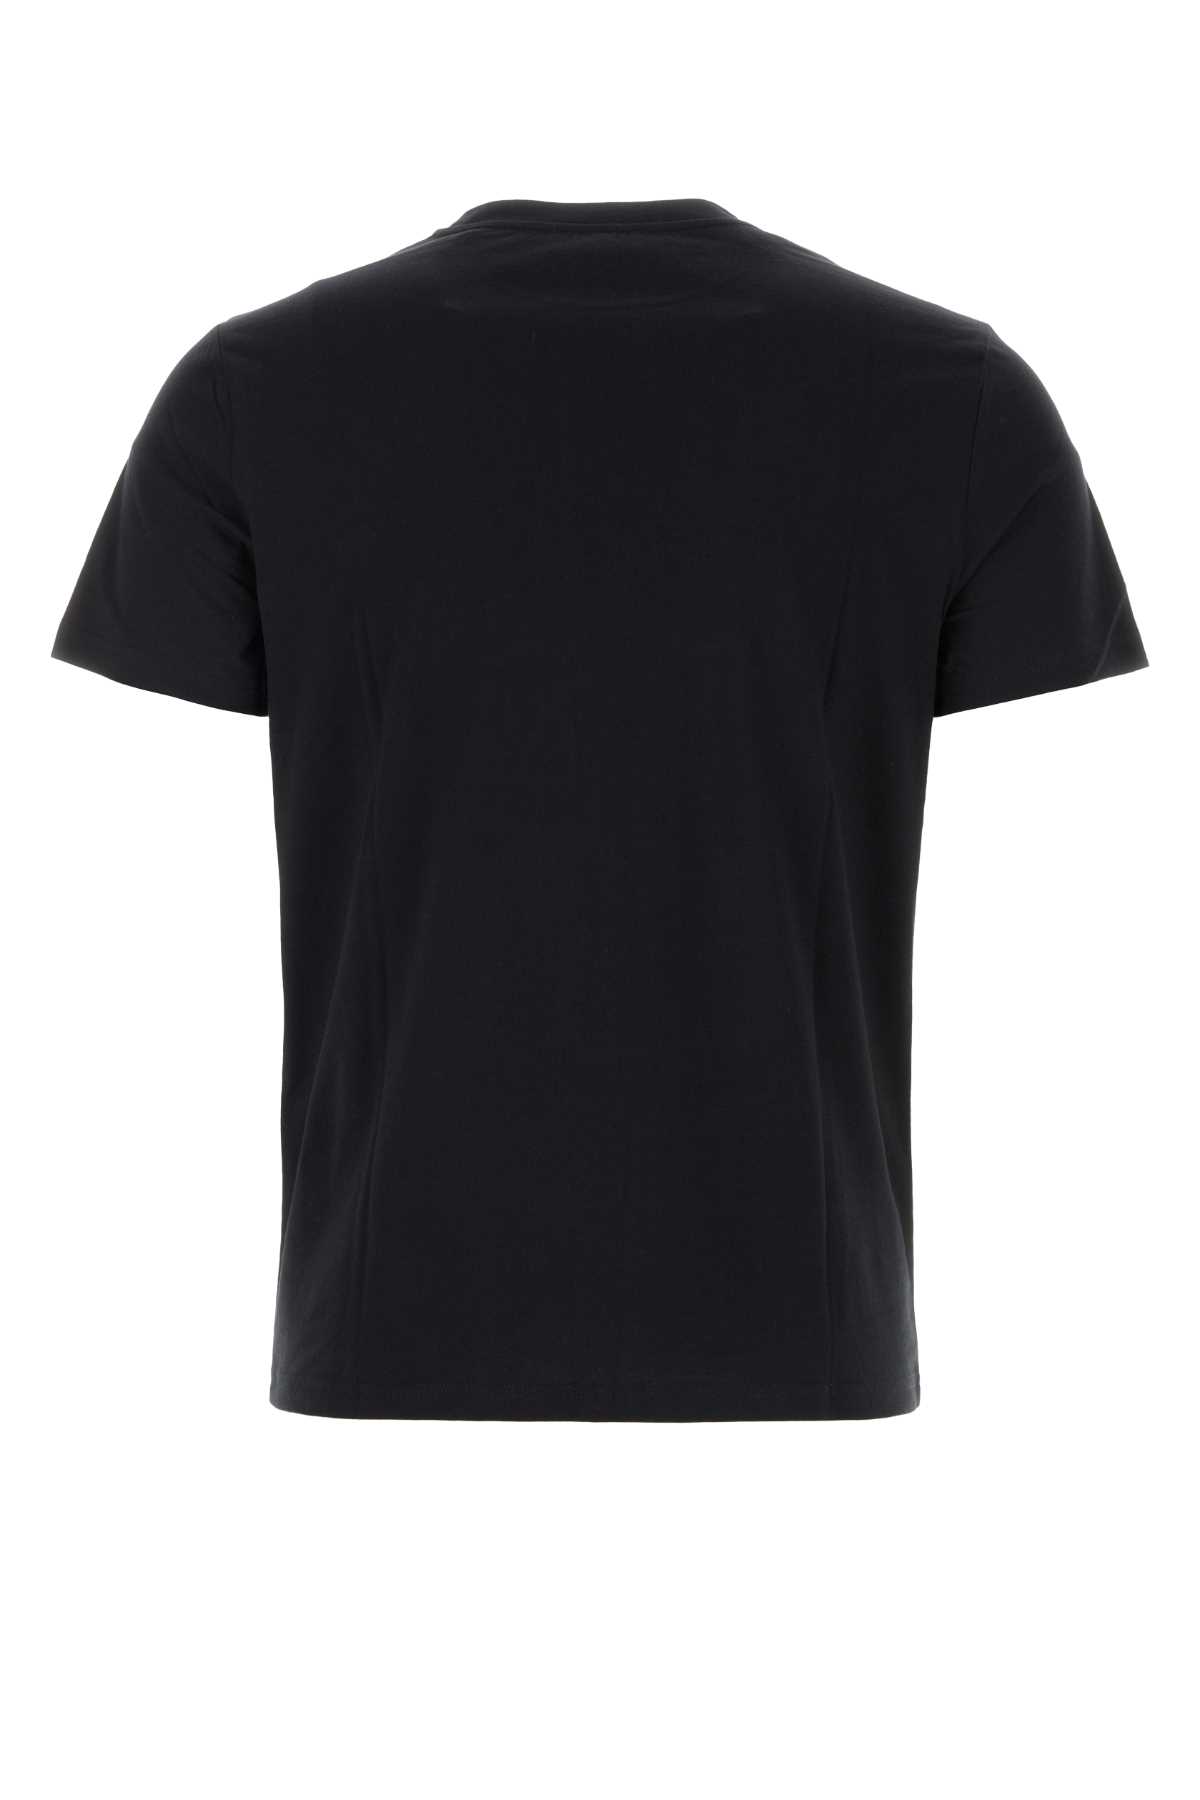 Apc Black Cotton Item T-shirt In Lzz